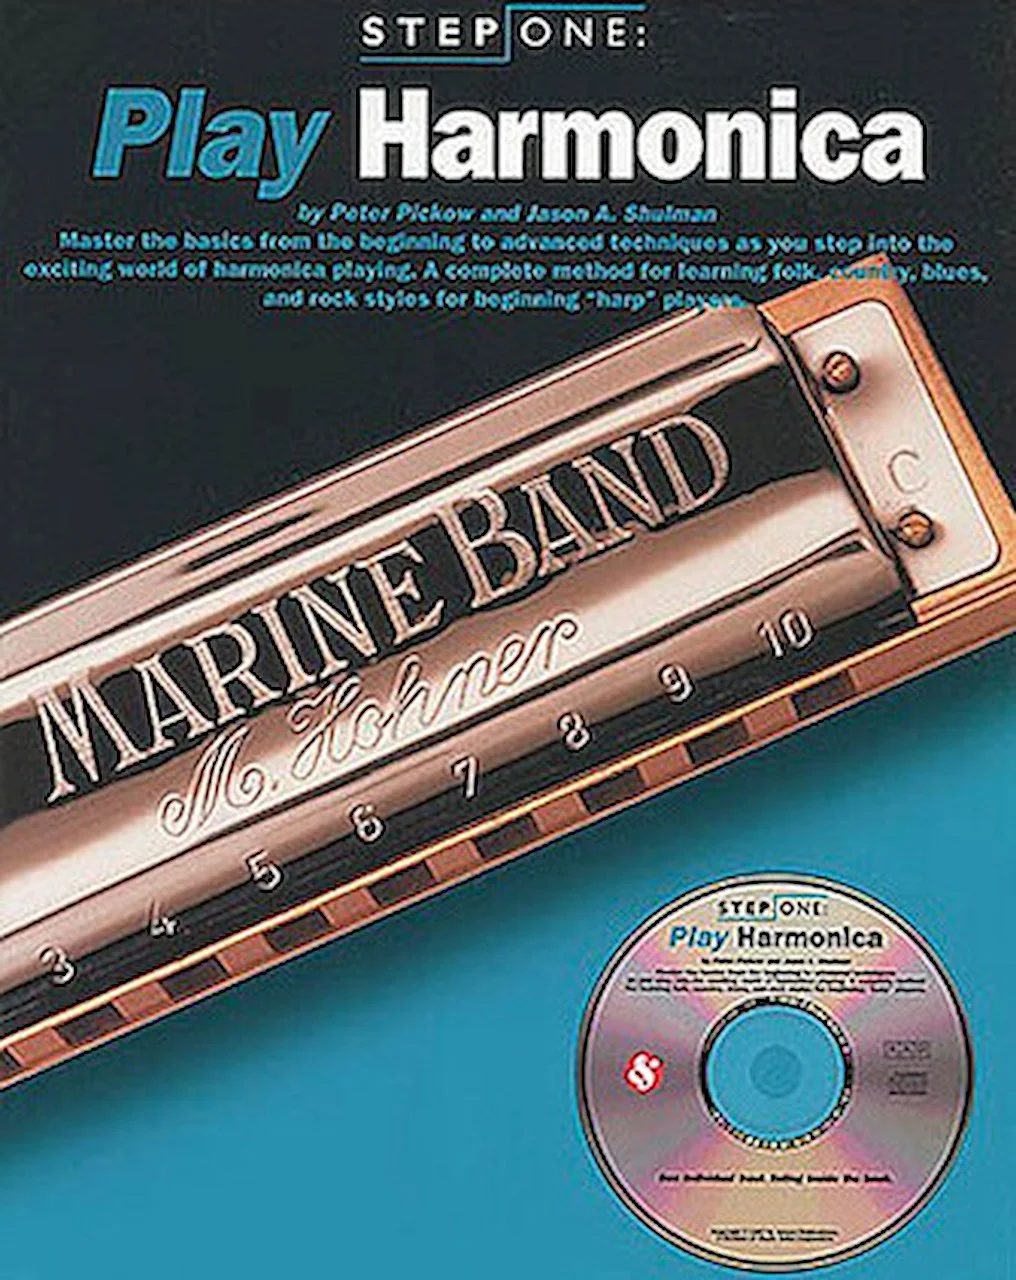 Step Play Harmonica 752187942078 | eBay